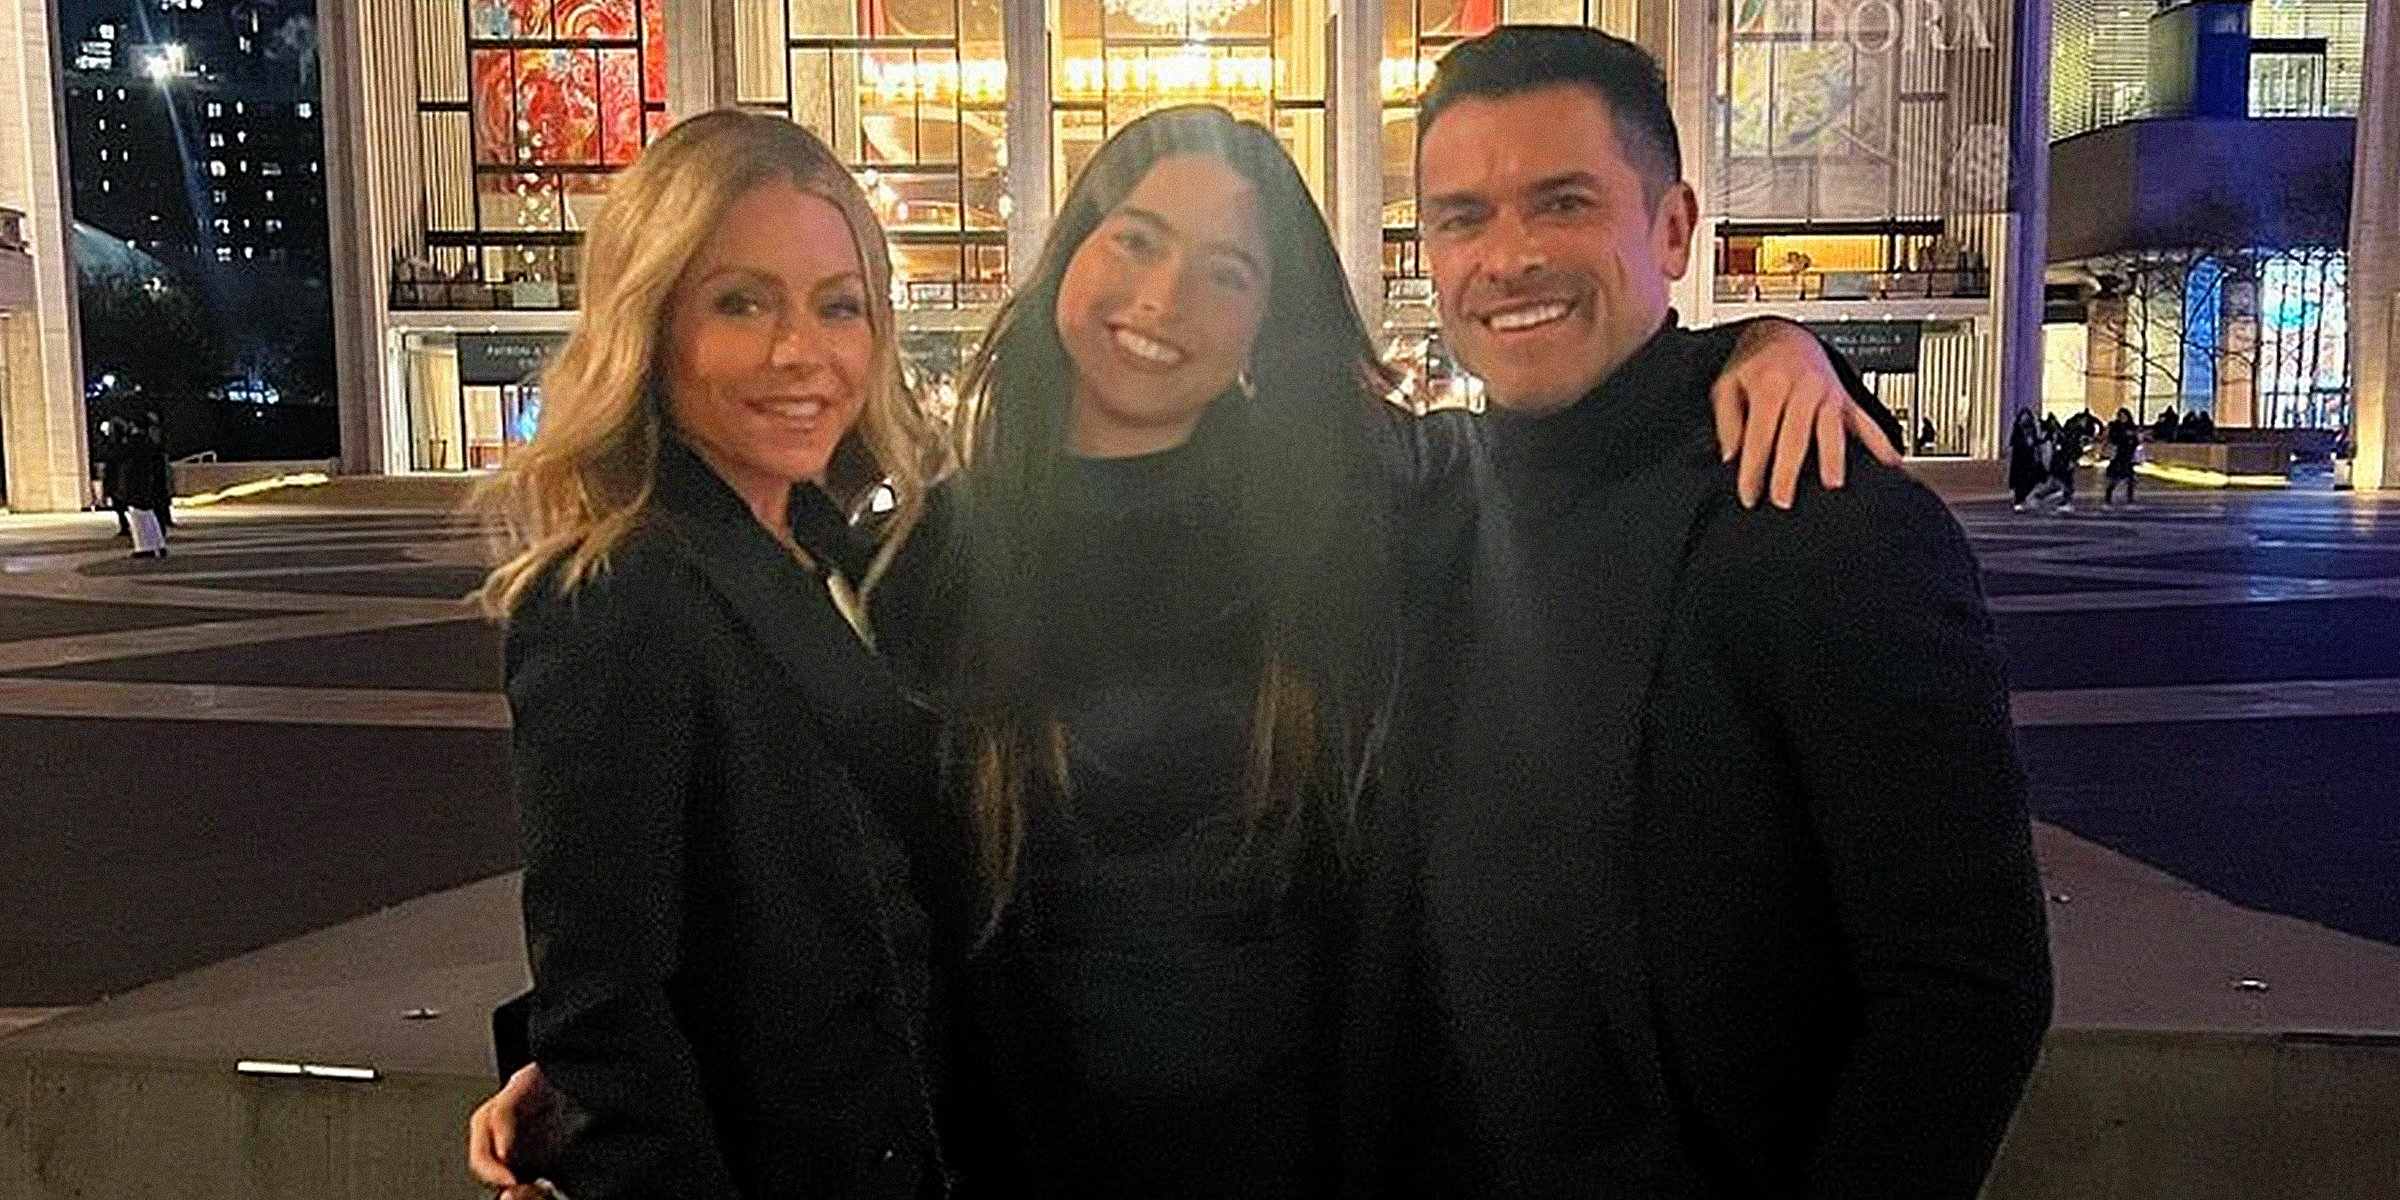 Kelly Ripa, Mark Consuelos and Their Daughter Lola Consuelos | Source: Instagram/kellyripa